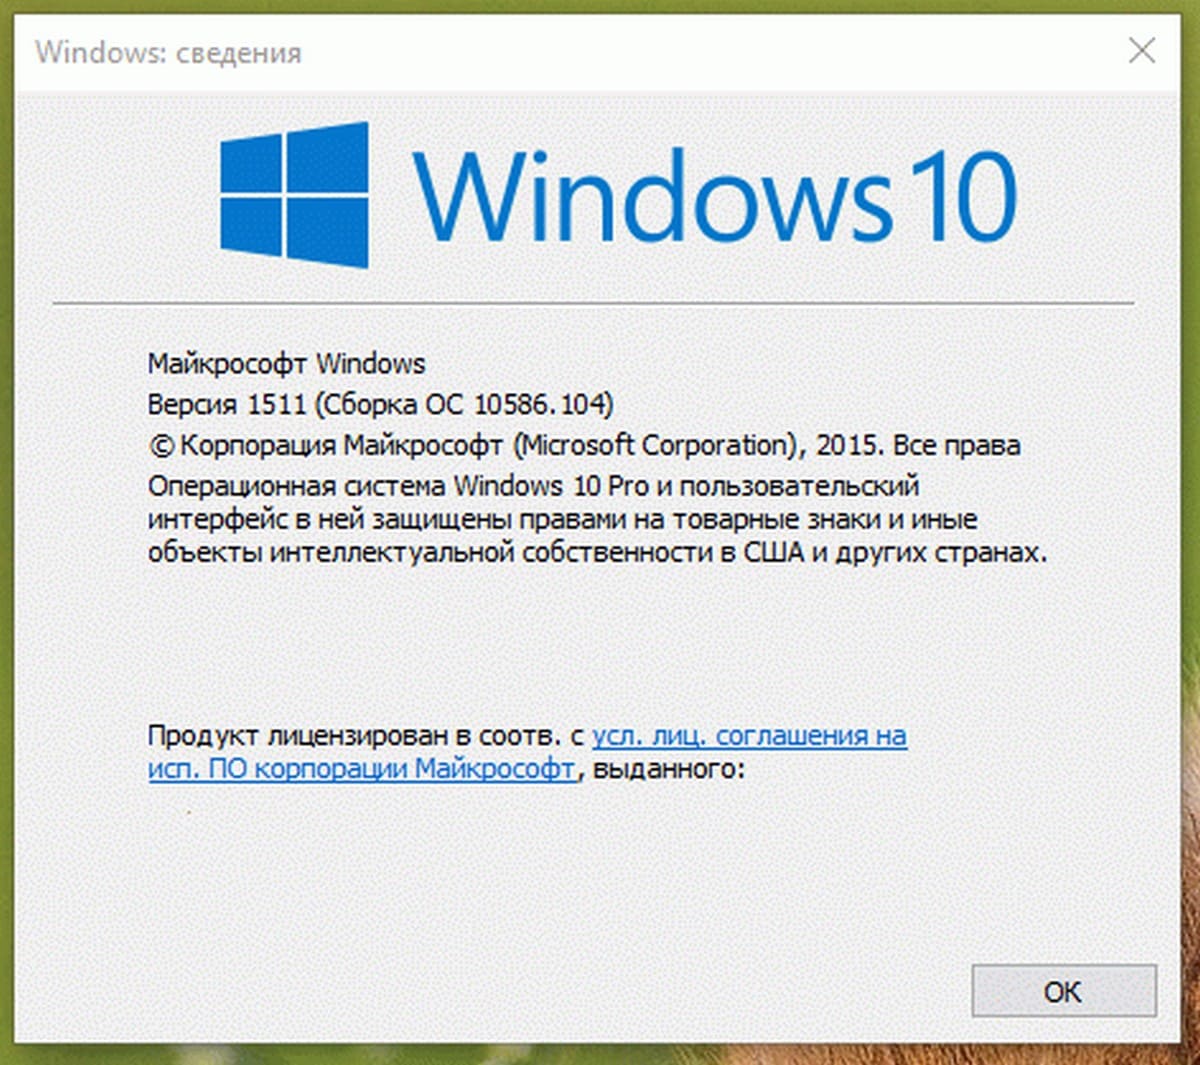 Windows 10 build 10586.104 